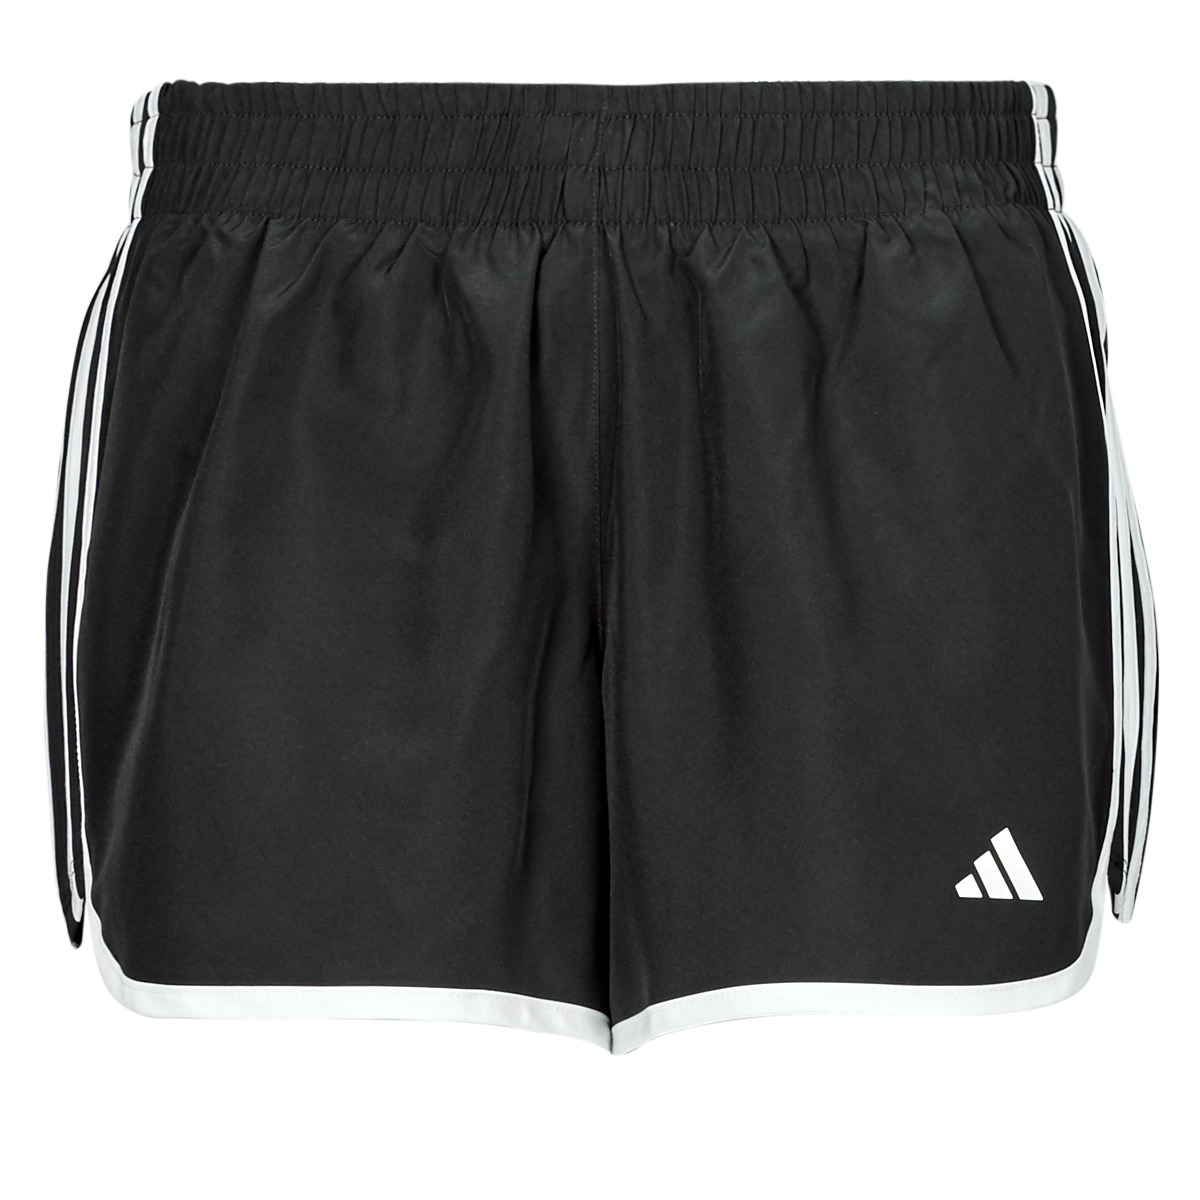 Textiel Dames Korte broeken / Bermuda's adidas Performance M20 SHORT Zwart / Wit